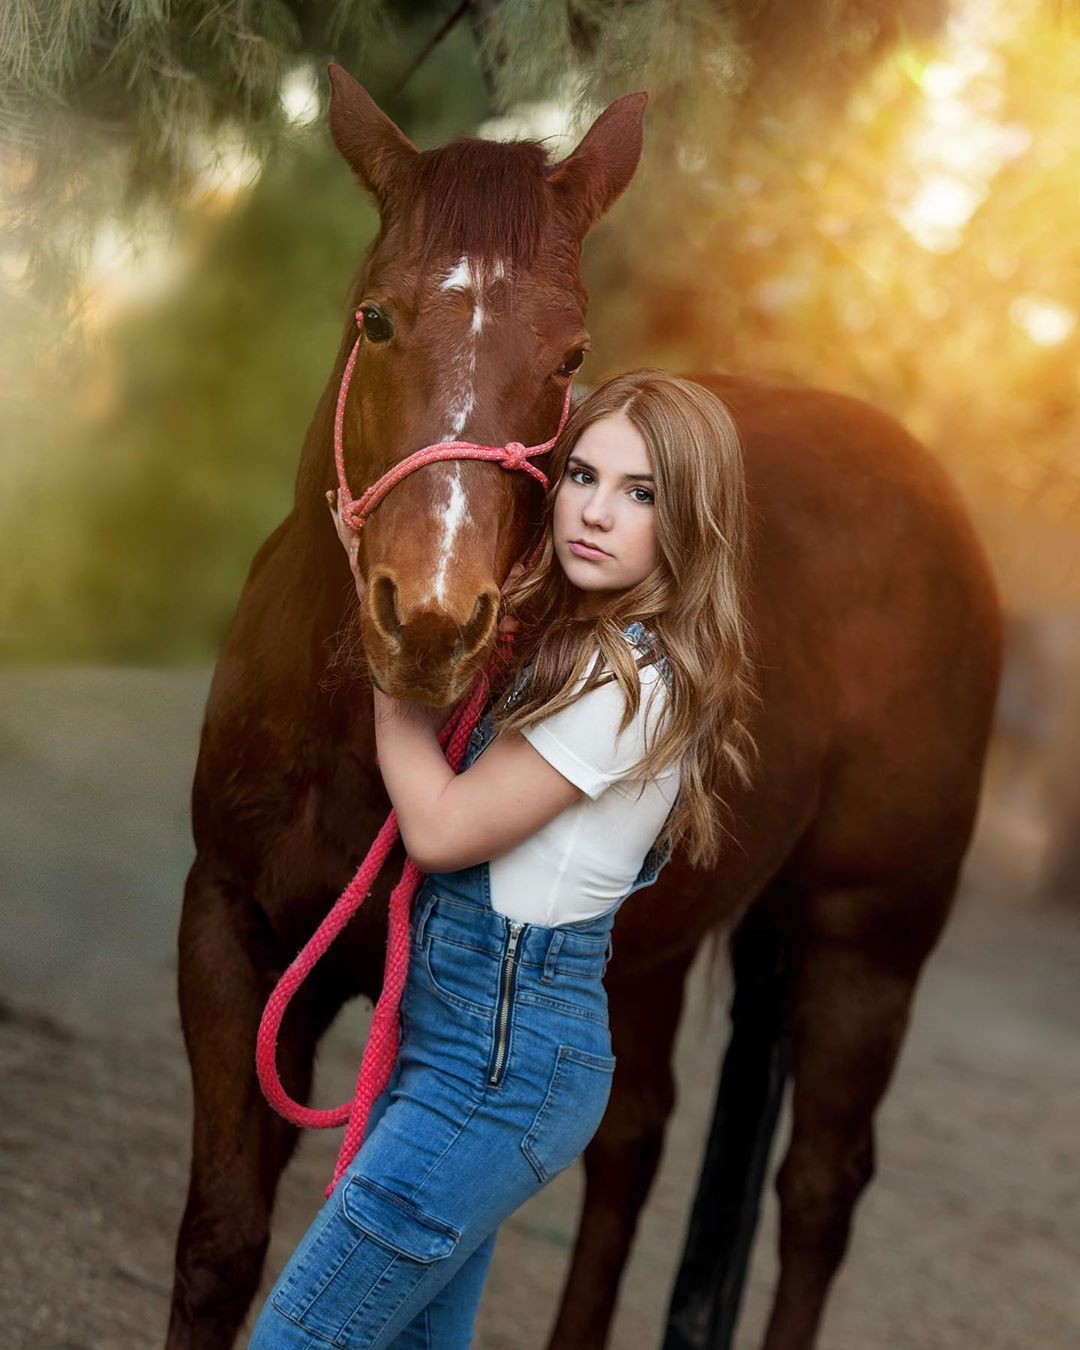 Piper Rockelle, horse supplies, horse tack, vertebrate: Piper Rockelle Instagram  